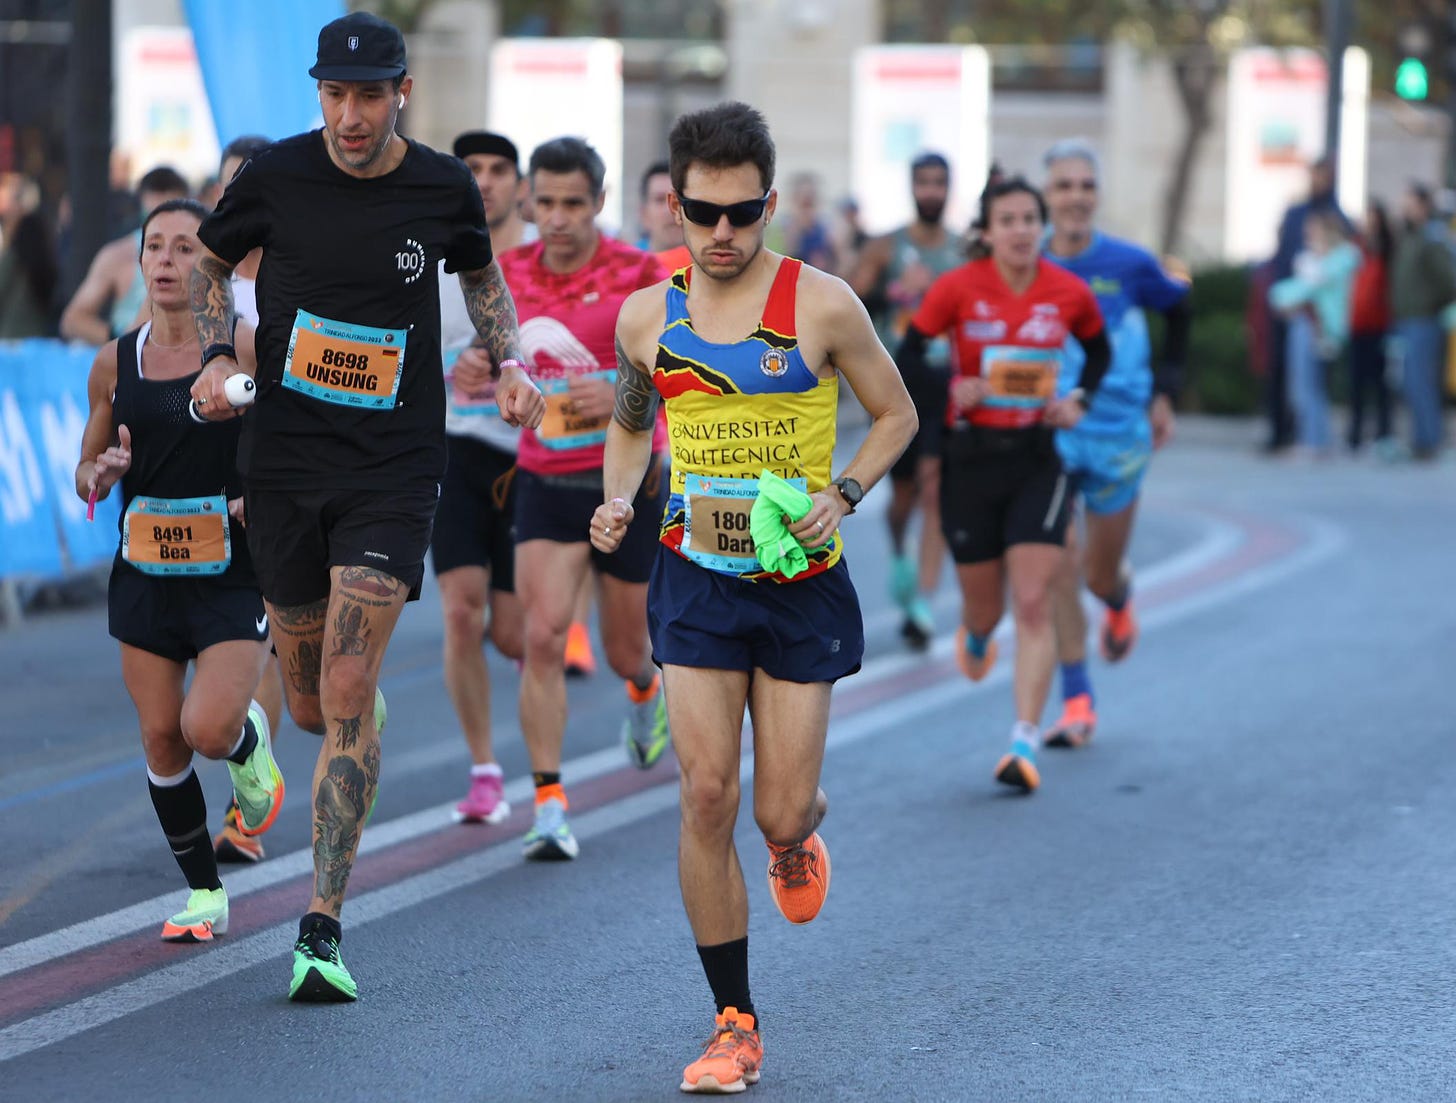 Chris Z racing the Valencia Marathon in a black Runhundred Shirt